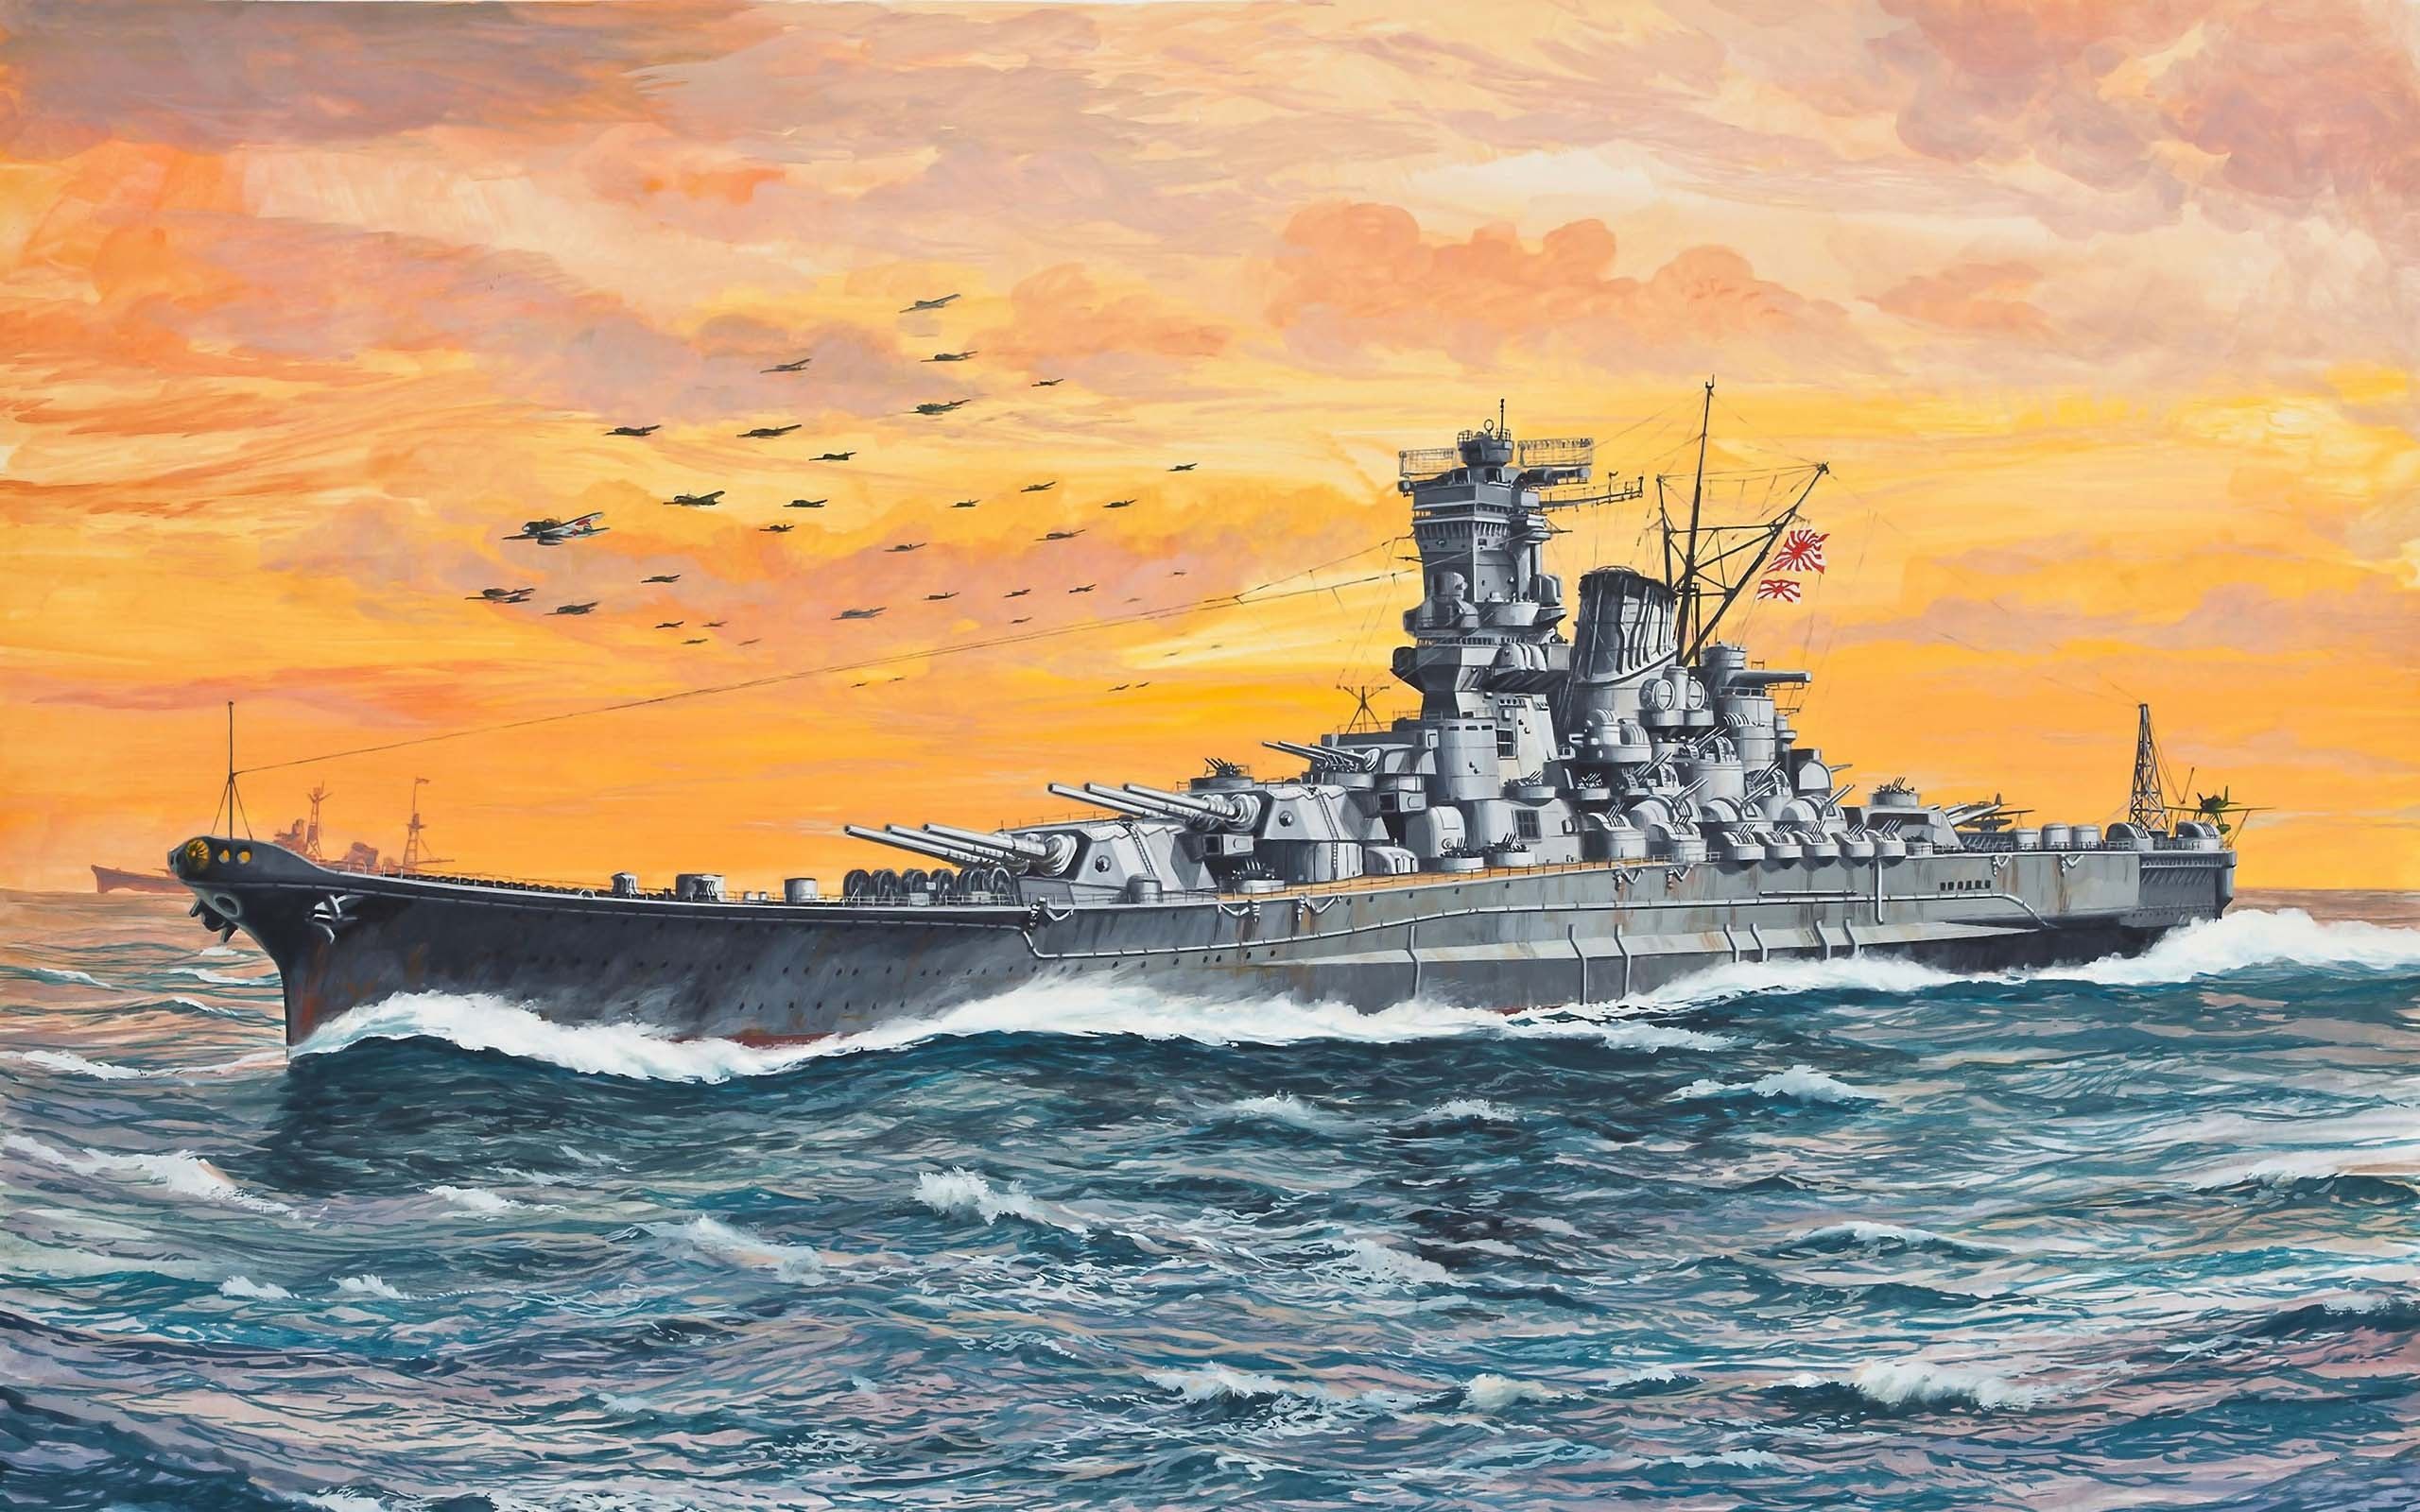 Battleship Yamato Wallpaper. World of warships wallpaper, Battleship, Navy wallpaper